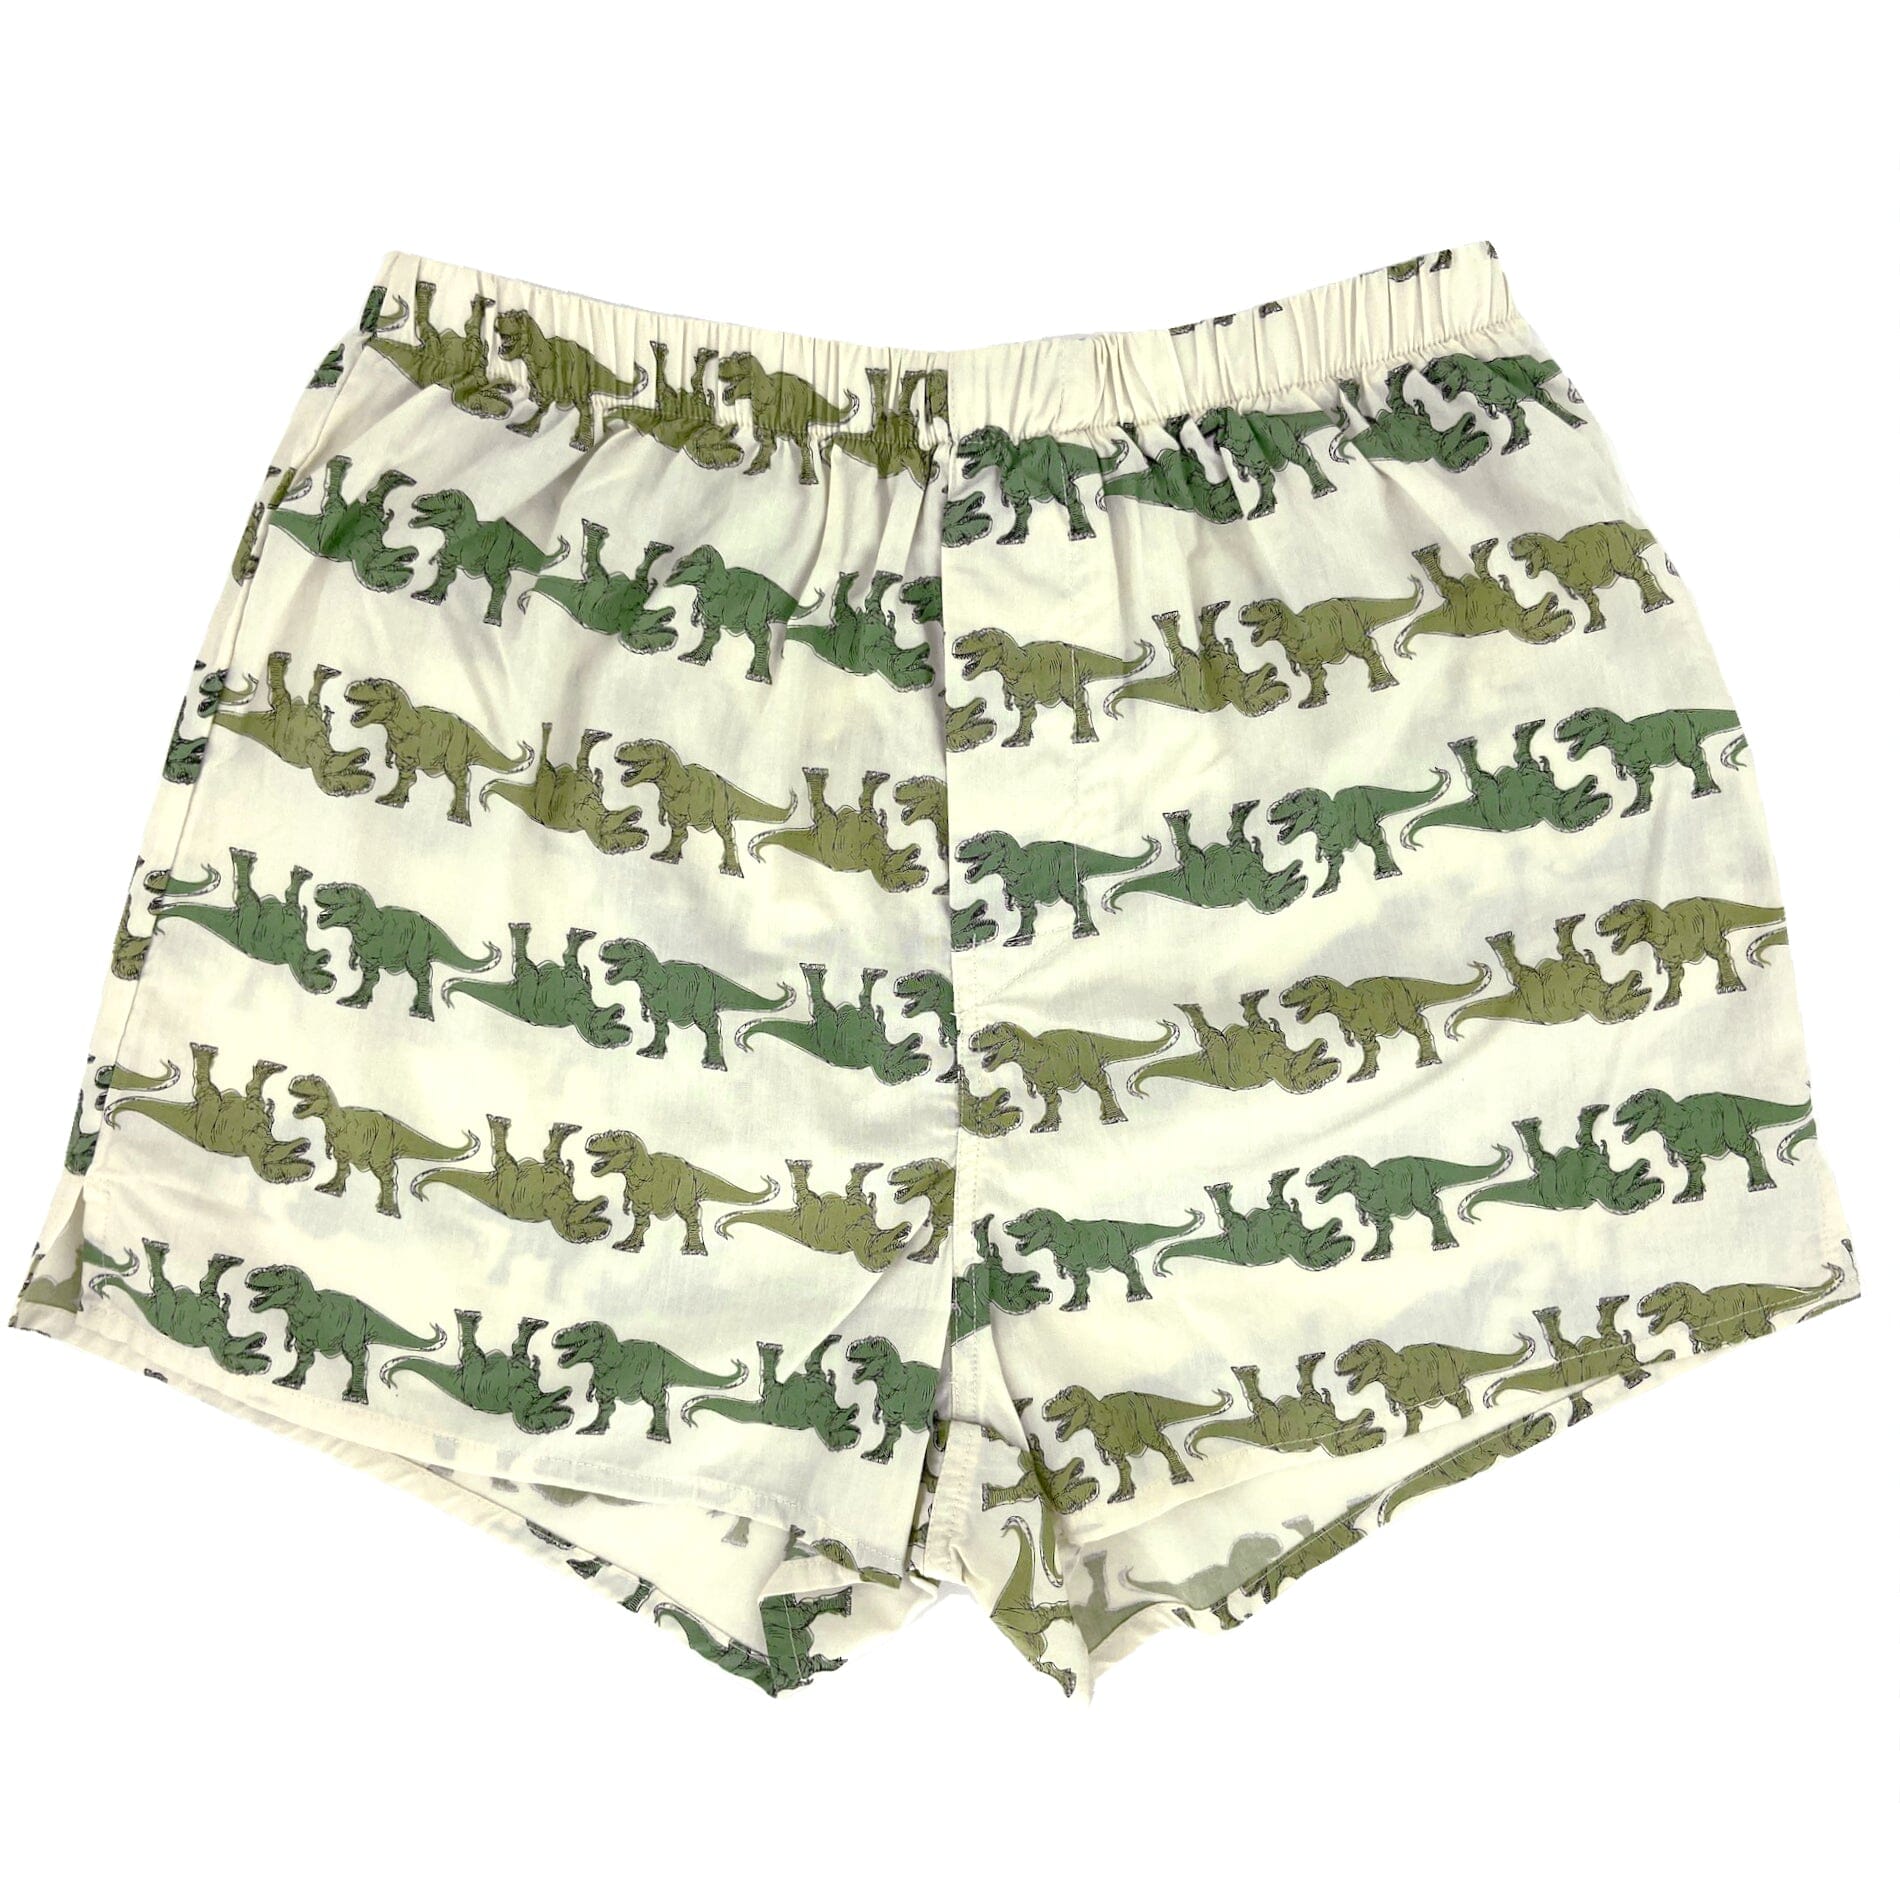 Men's Fun T-Rex Dinosaur Patterned Soft Cotton Boxer Shorts Underwear